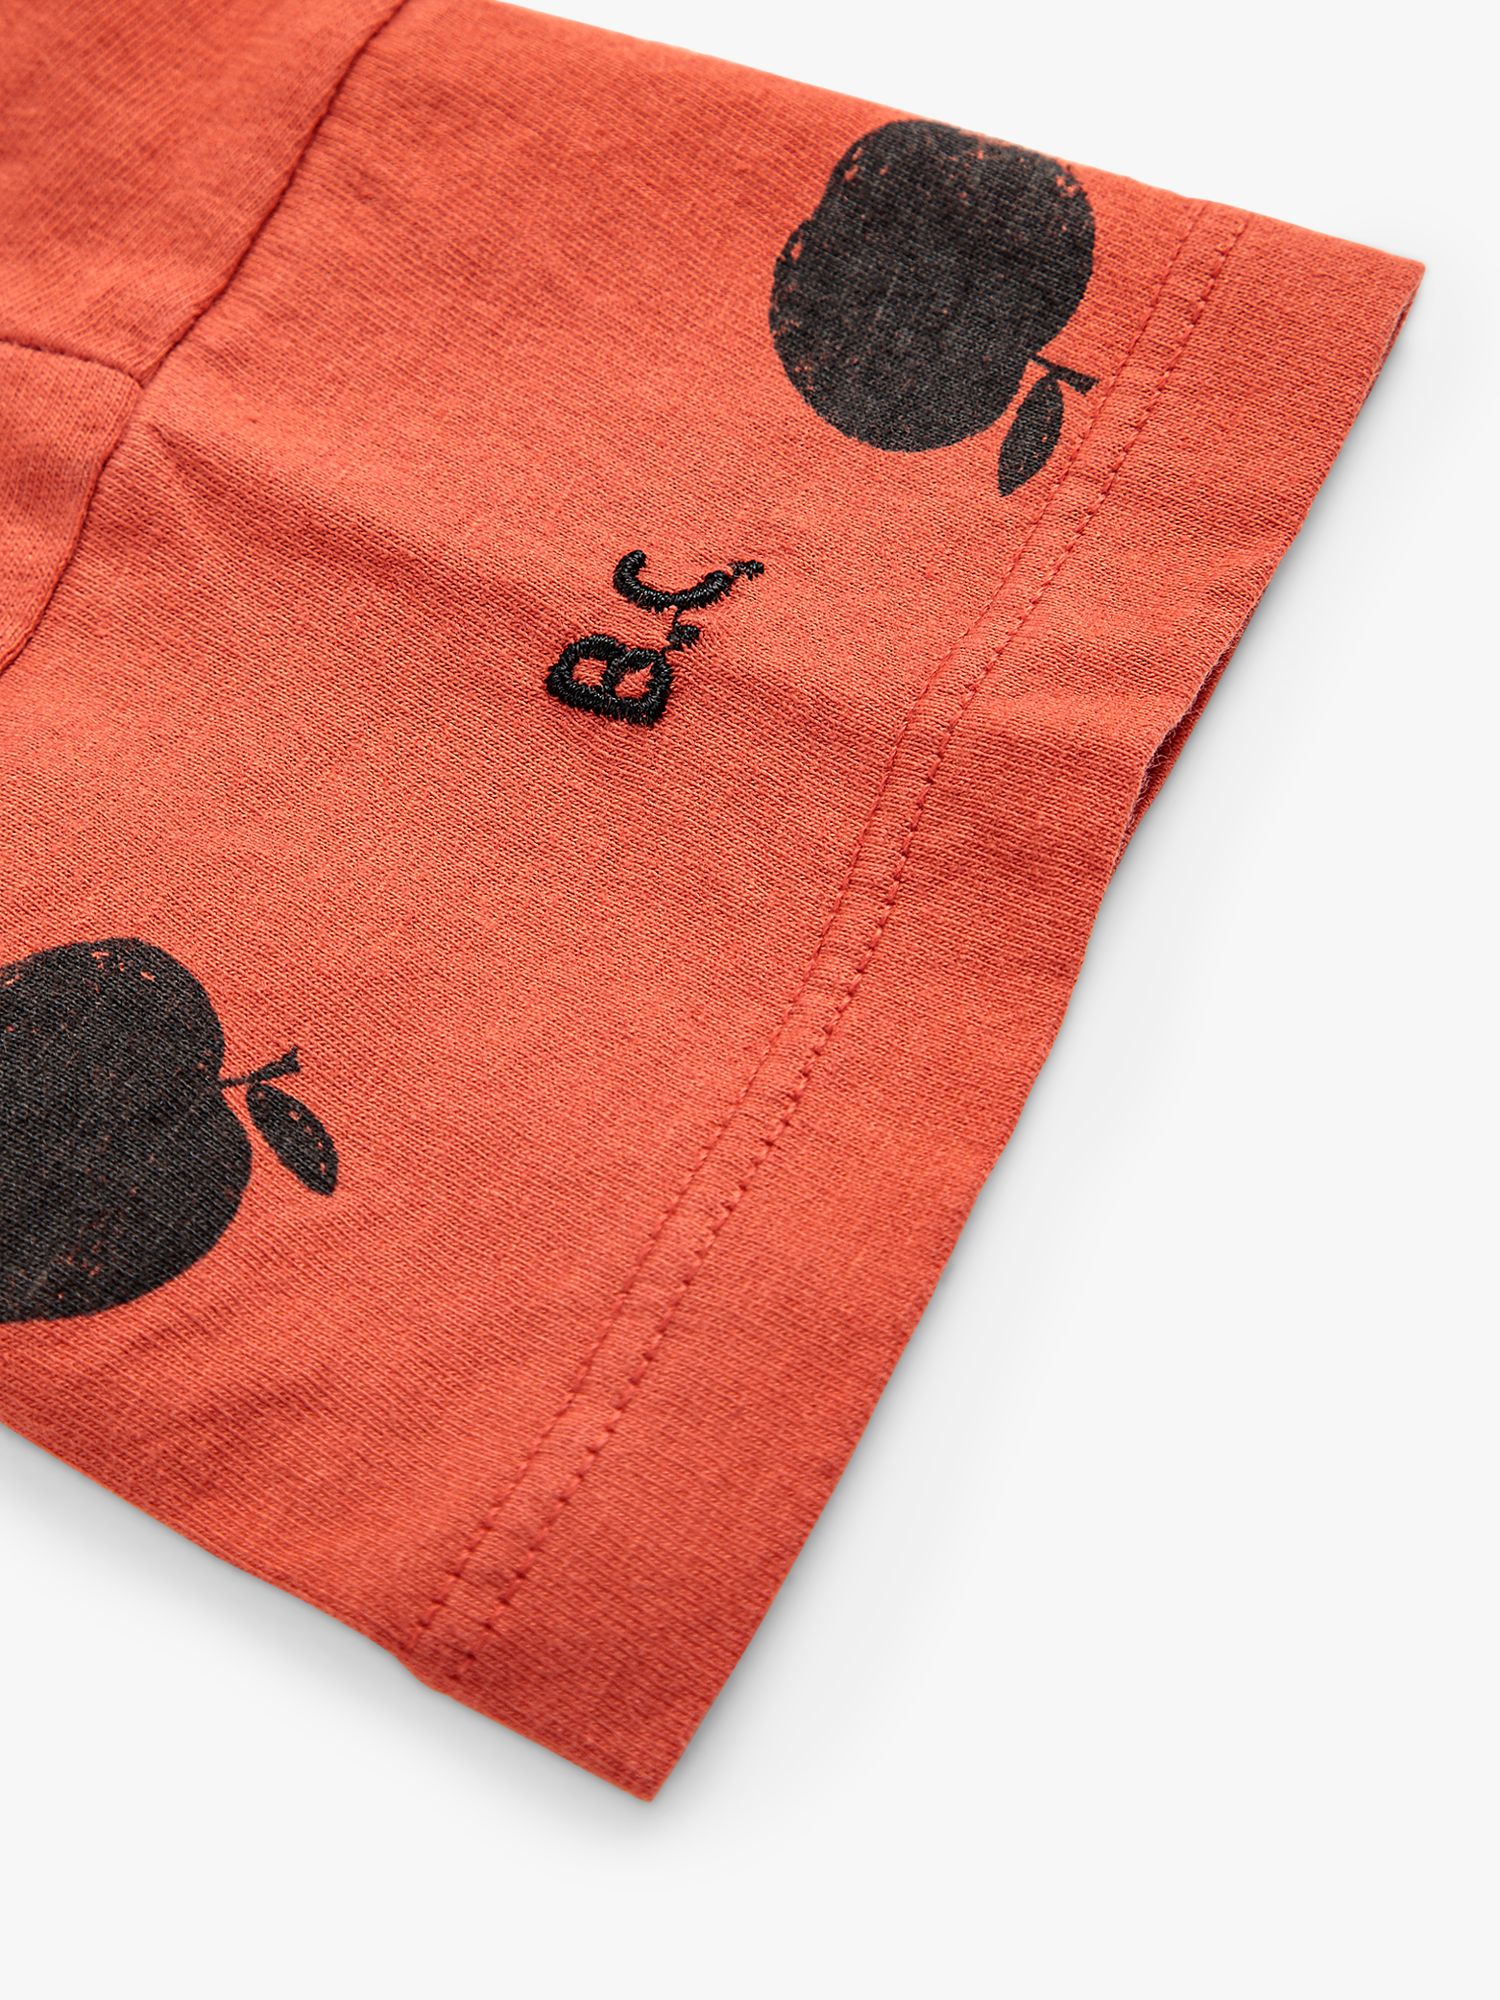 Bobo Choses Kids' Organic Cotton Blend Poma Apple Print Dress, Red, 2-3 years